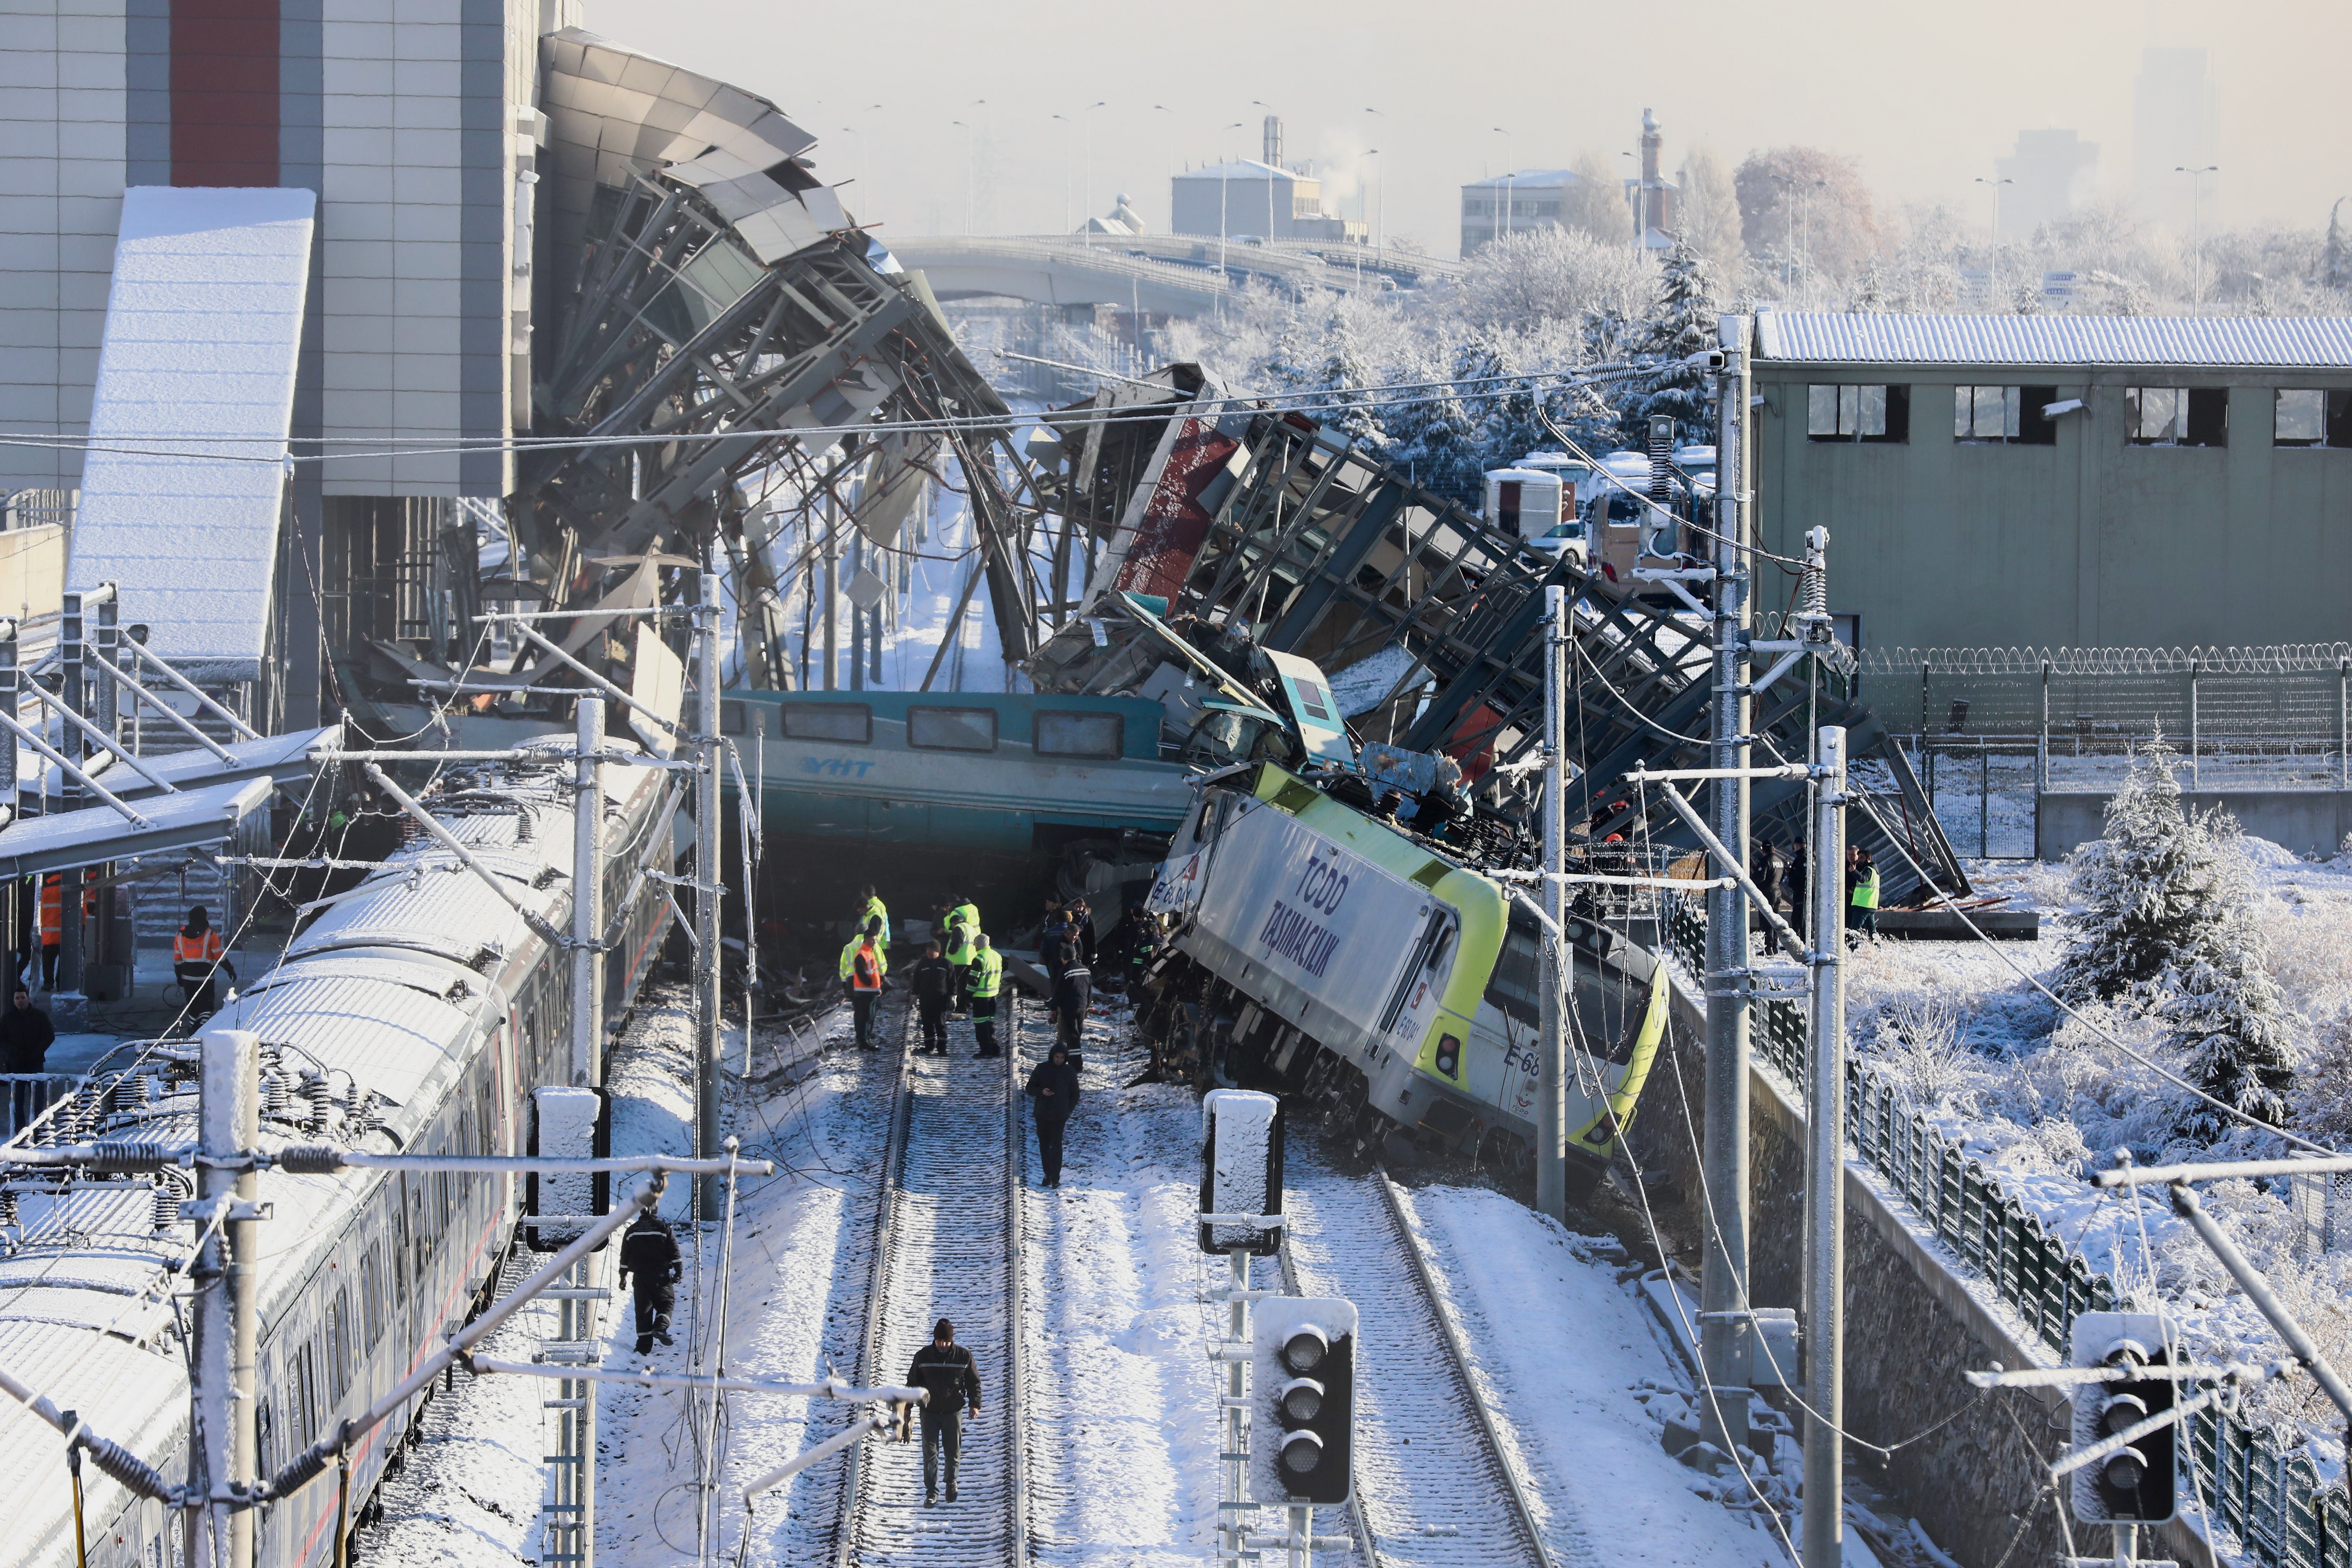 7 dead, 46 injured in train crash in Turkey’s capital